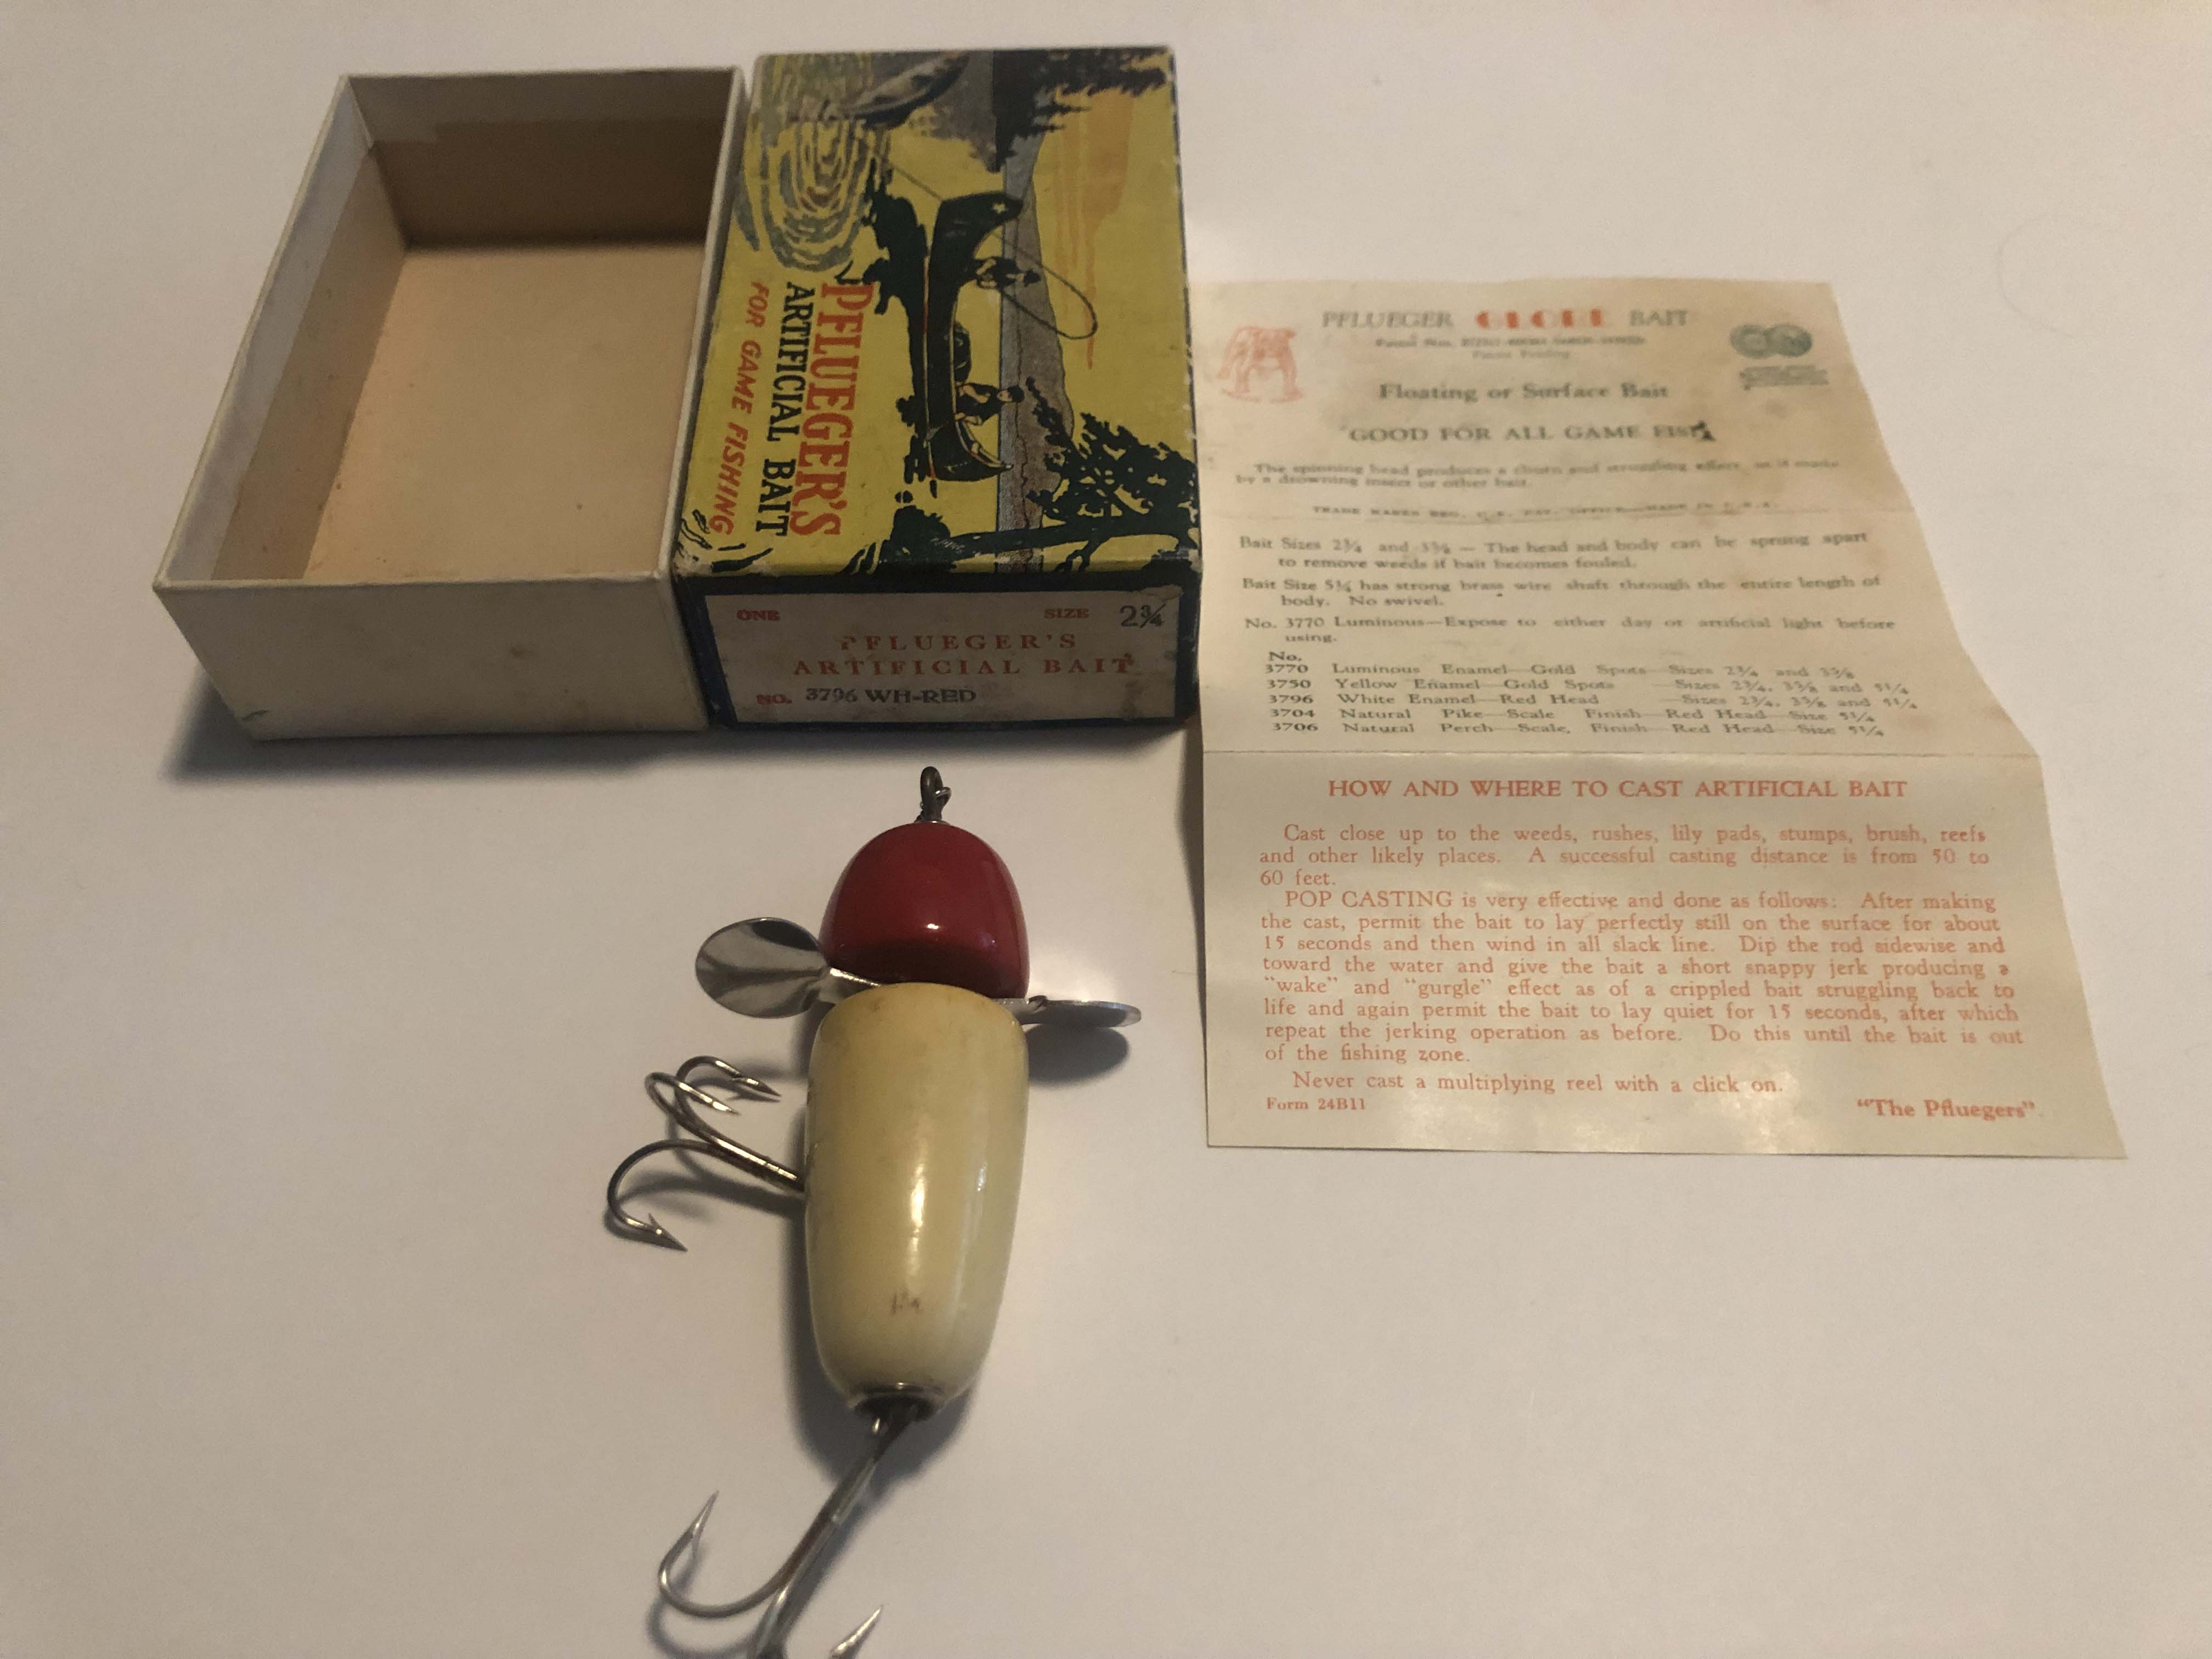 Vintage Pflueger Globe No 3796 fishing lure with